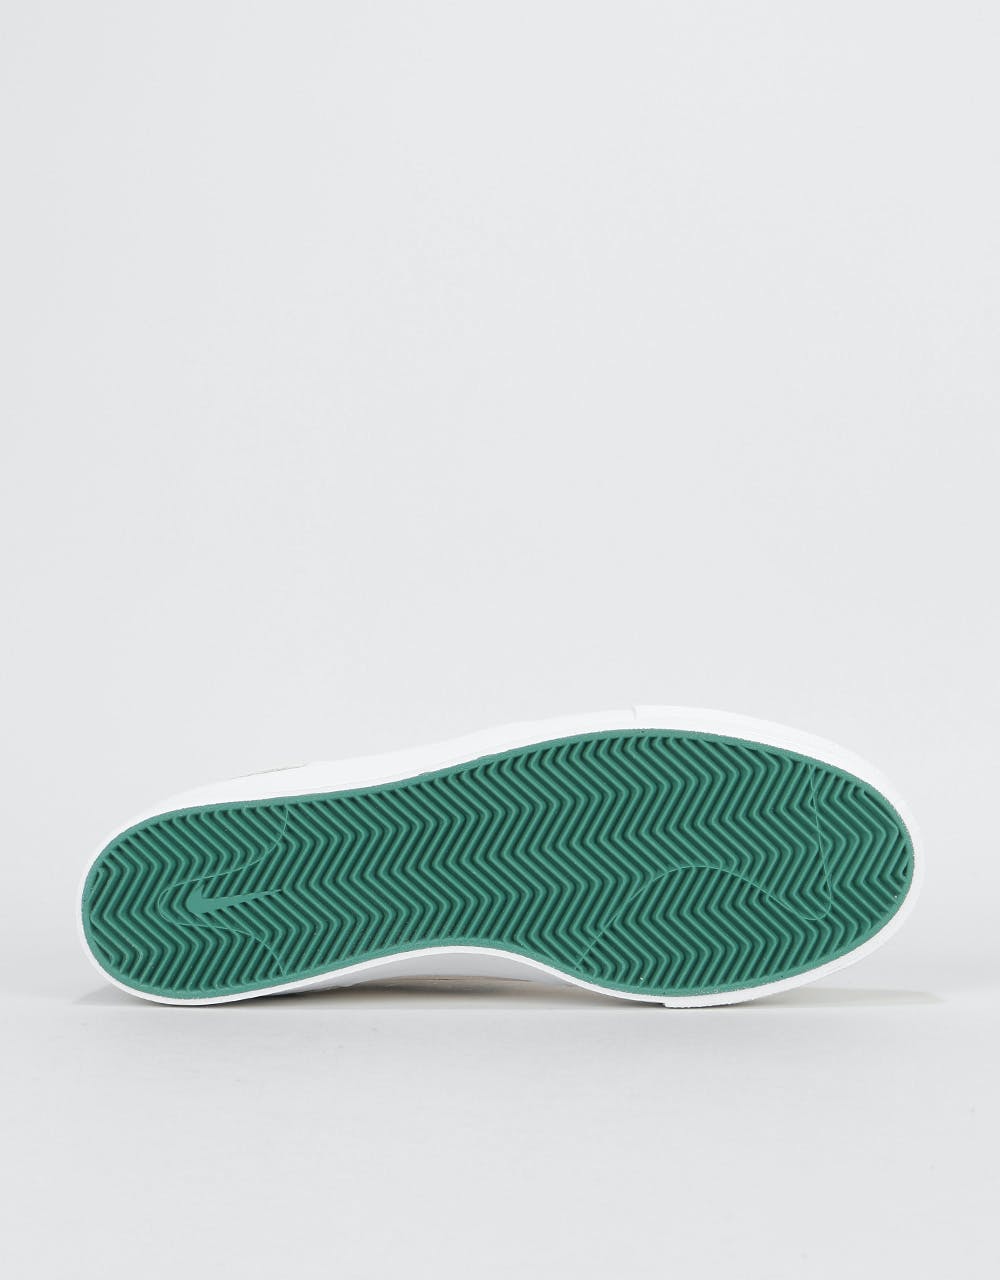 Nike SB Zoom Janoski RM Premium Skate Shoes - Summit White/Obsidian